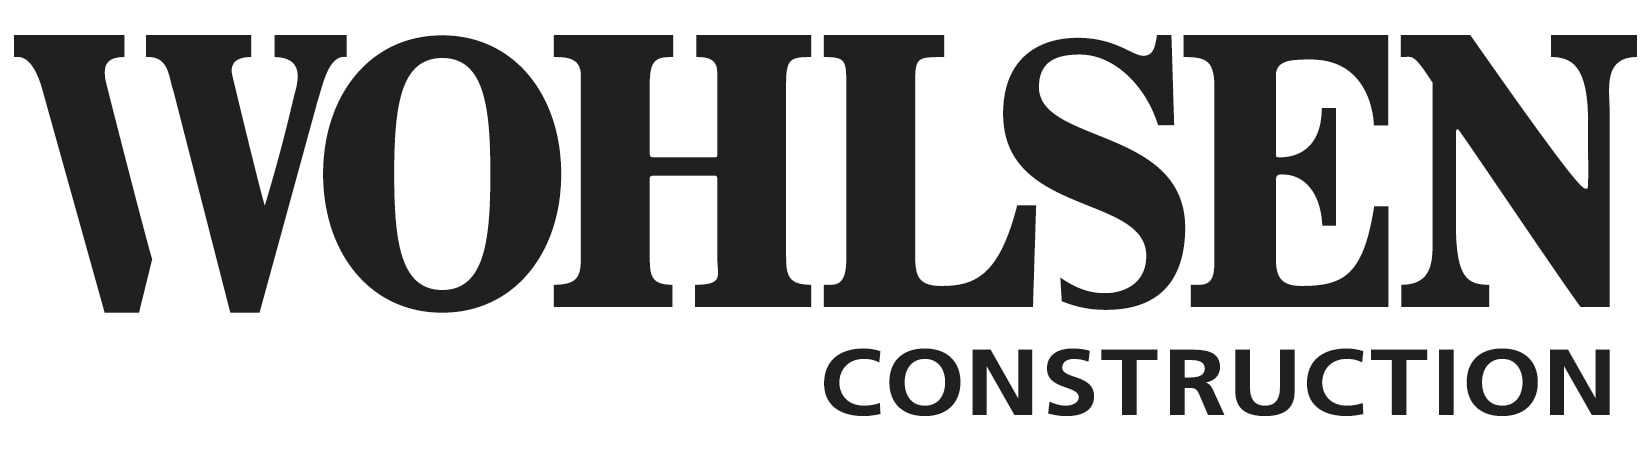 Wohlsen Construction company logo